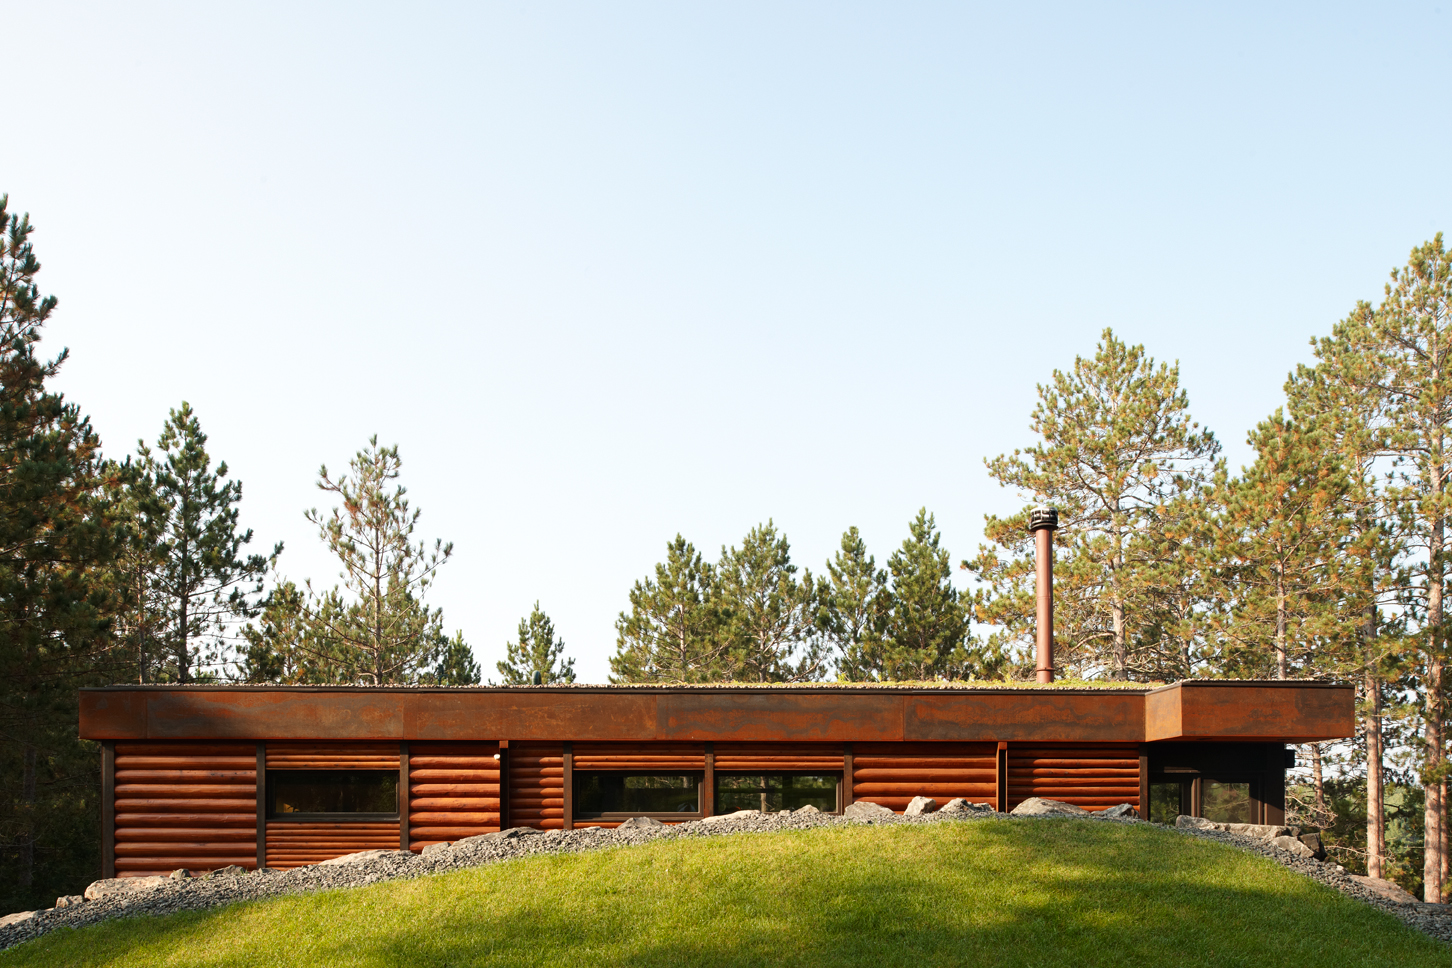 Log cabin vernacular reinterpreted by Christian Dean Architecture